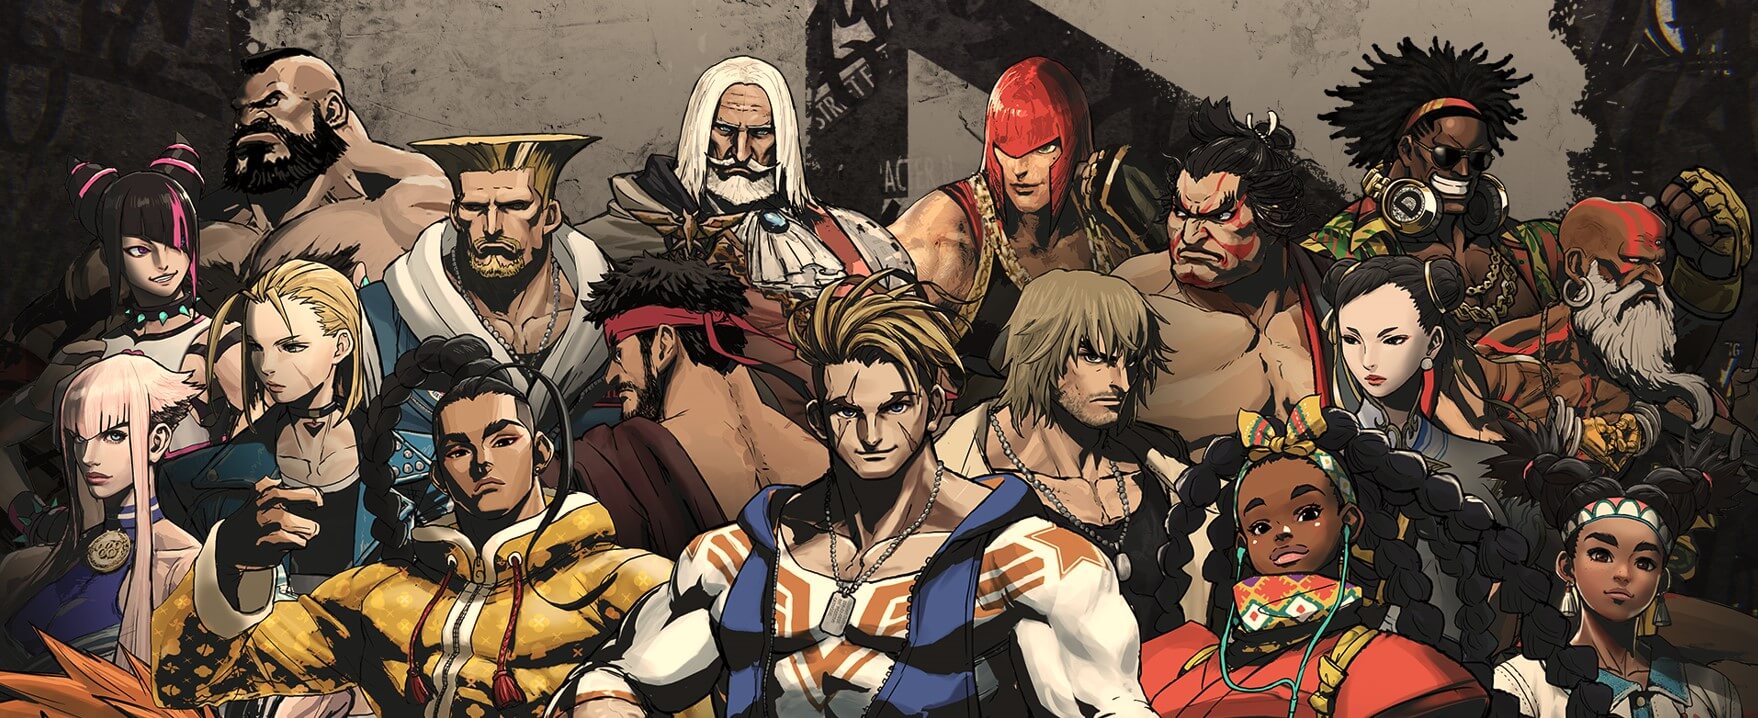 Best Street Fighter 6 Characters: Tier List Rankings